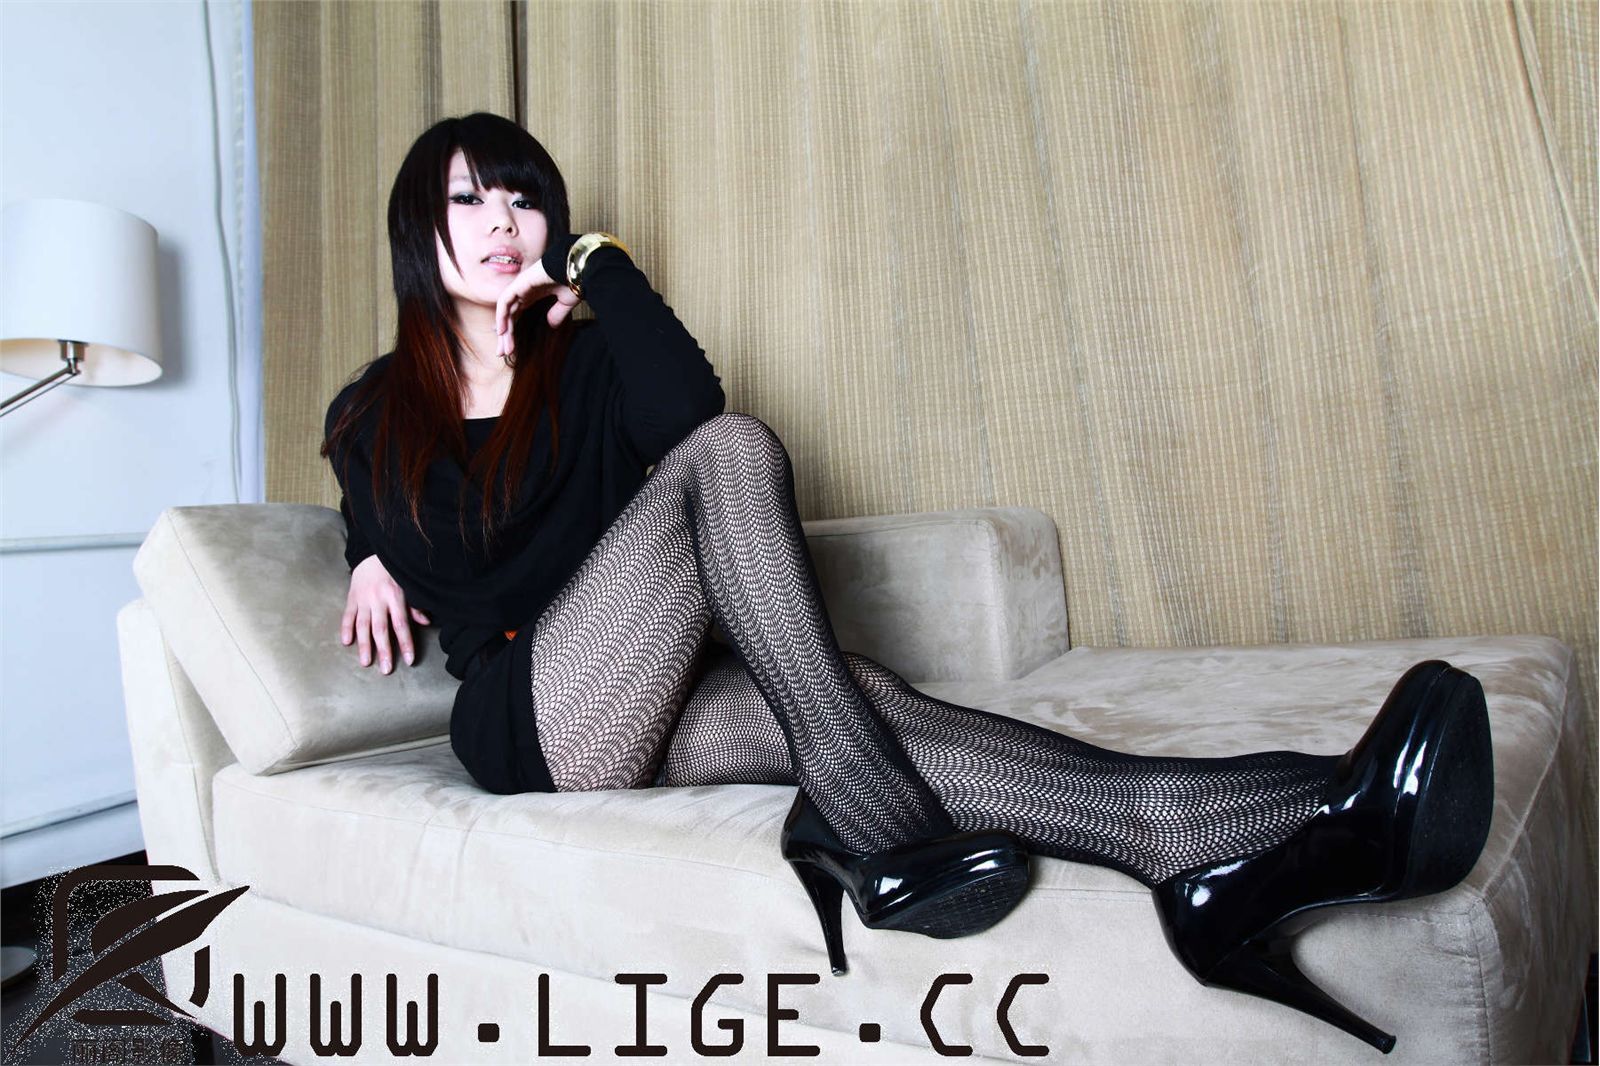 Lige Lige image f-no.001 Nana domestic sexy stockings beauty